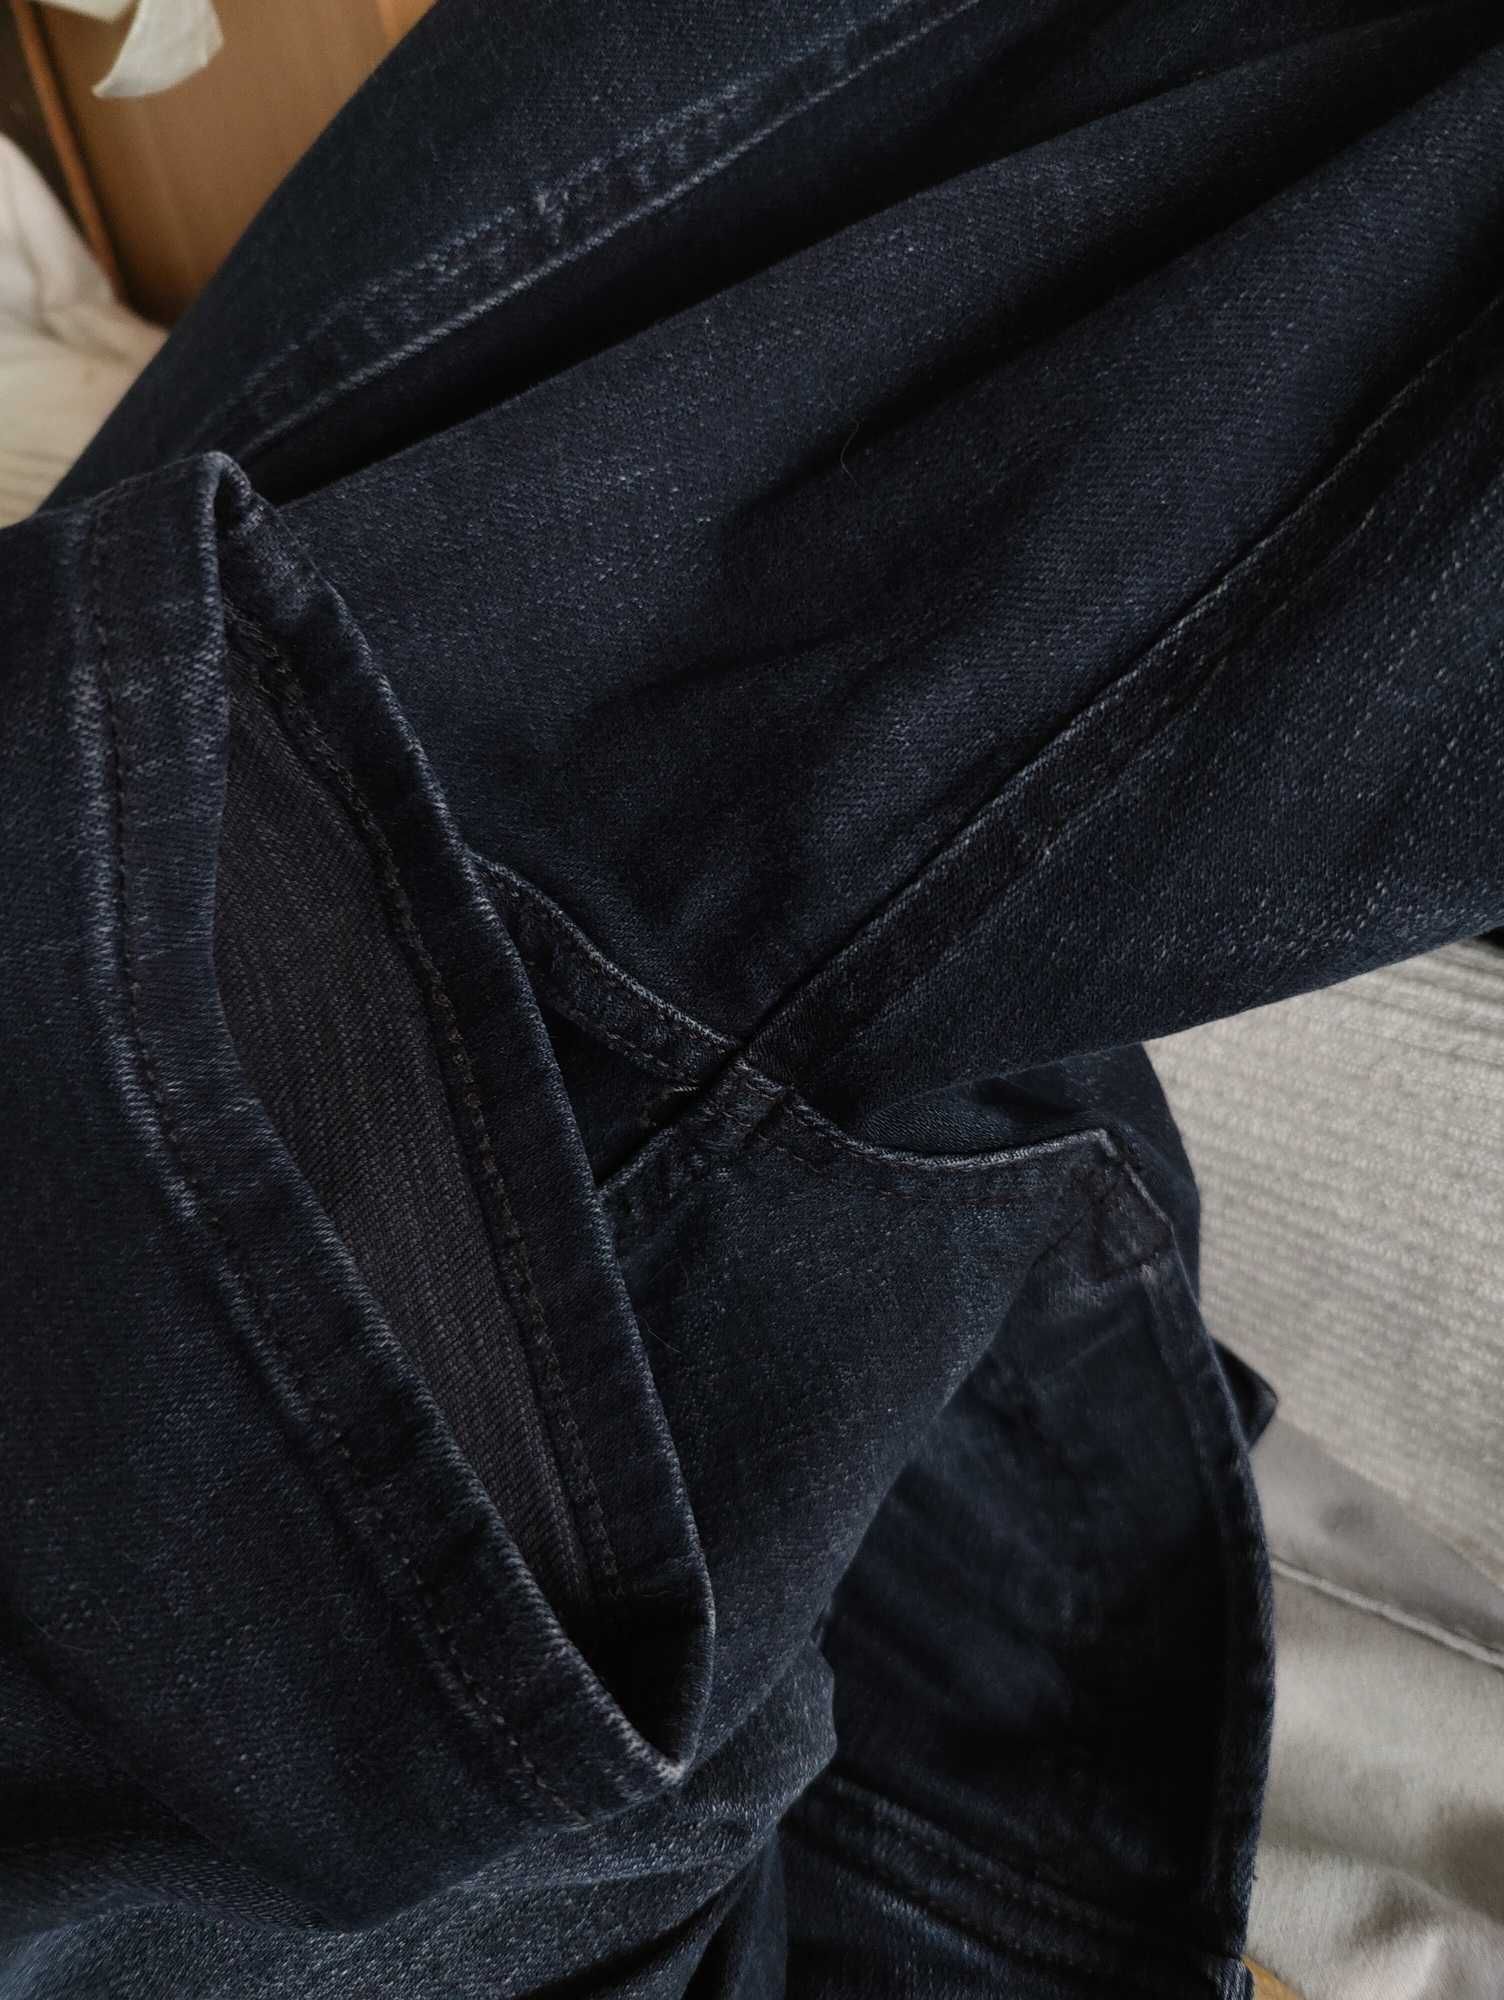 Джинсы Jack&jones Glenn jeans Дания w31 stretch dark navy.